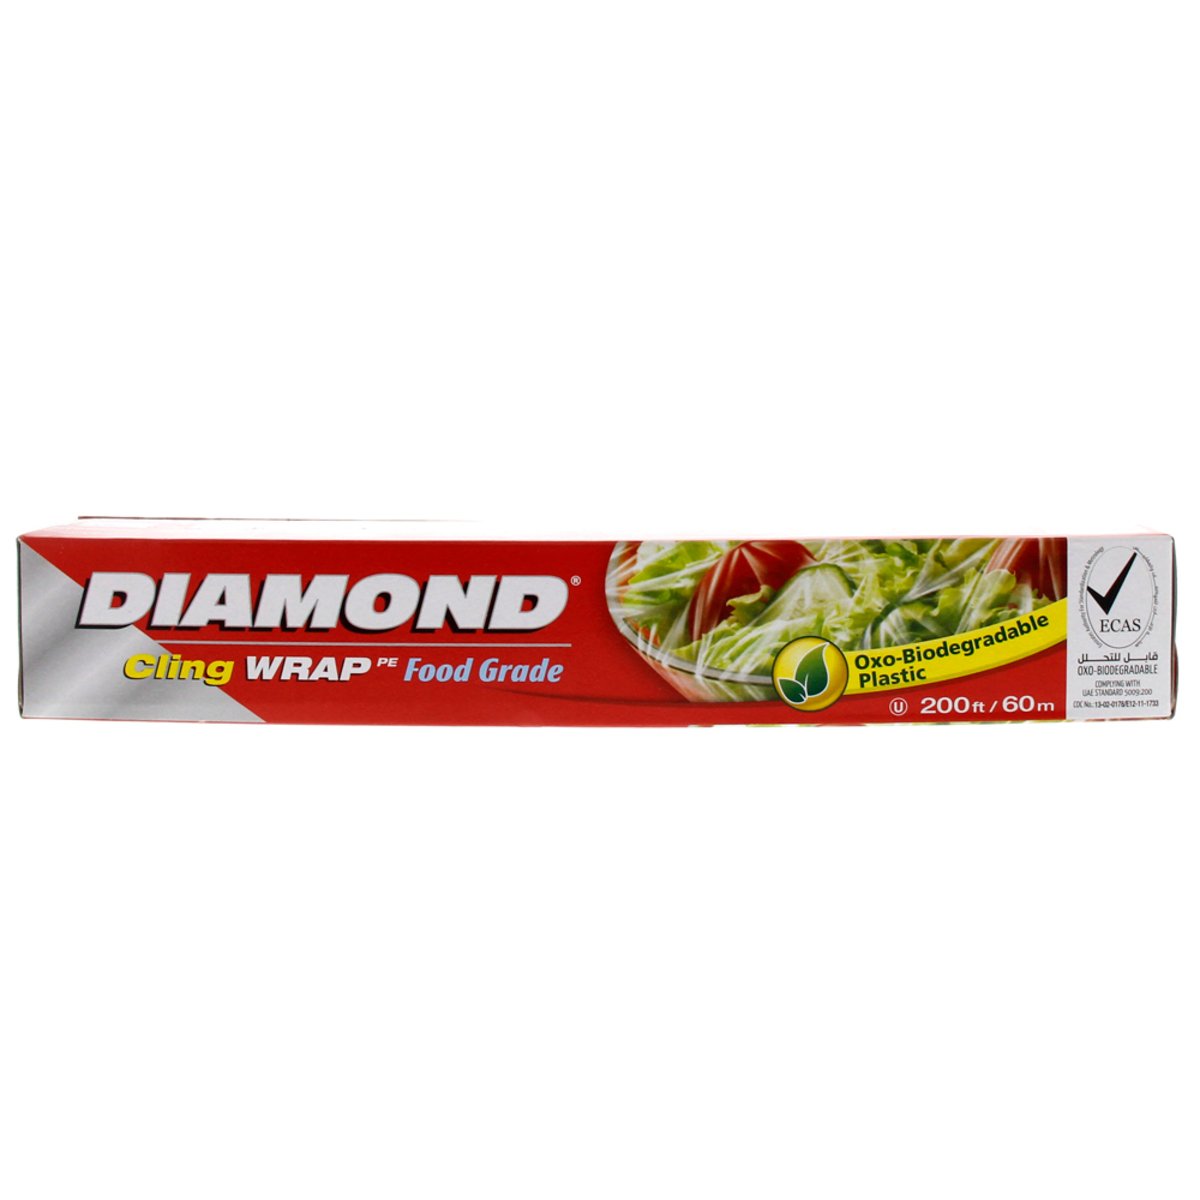 Diamond Cling Wrap Food Grade 200ft/60m